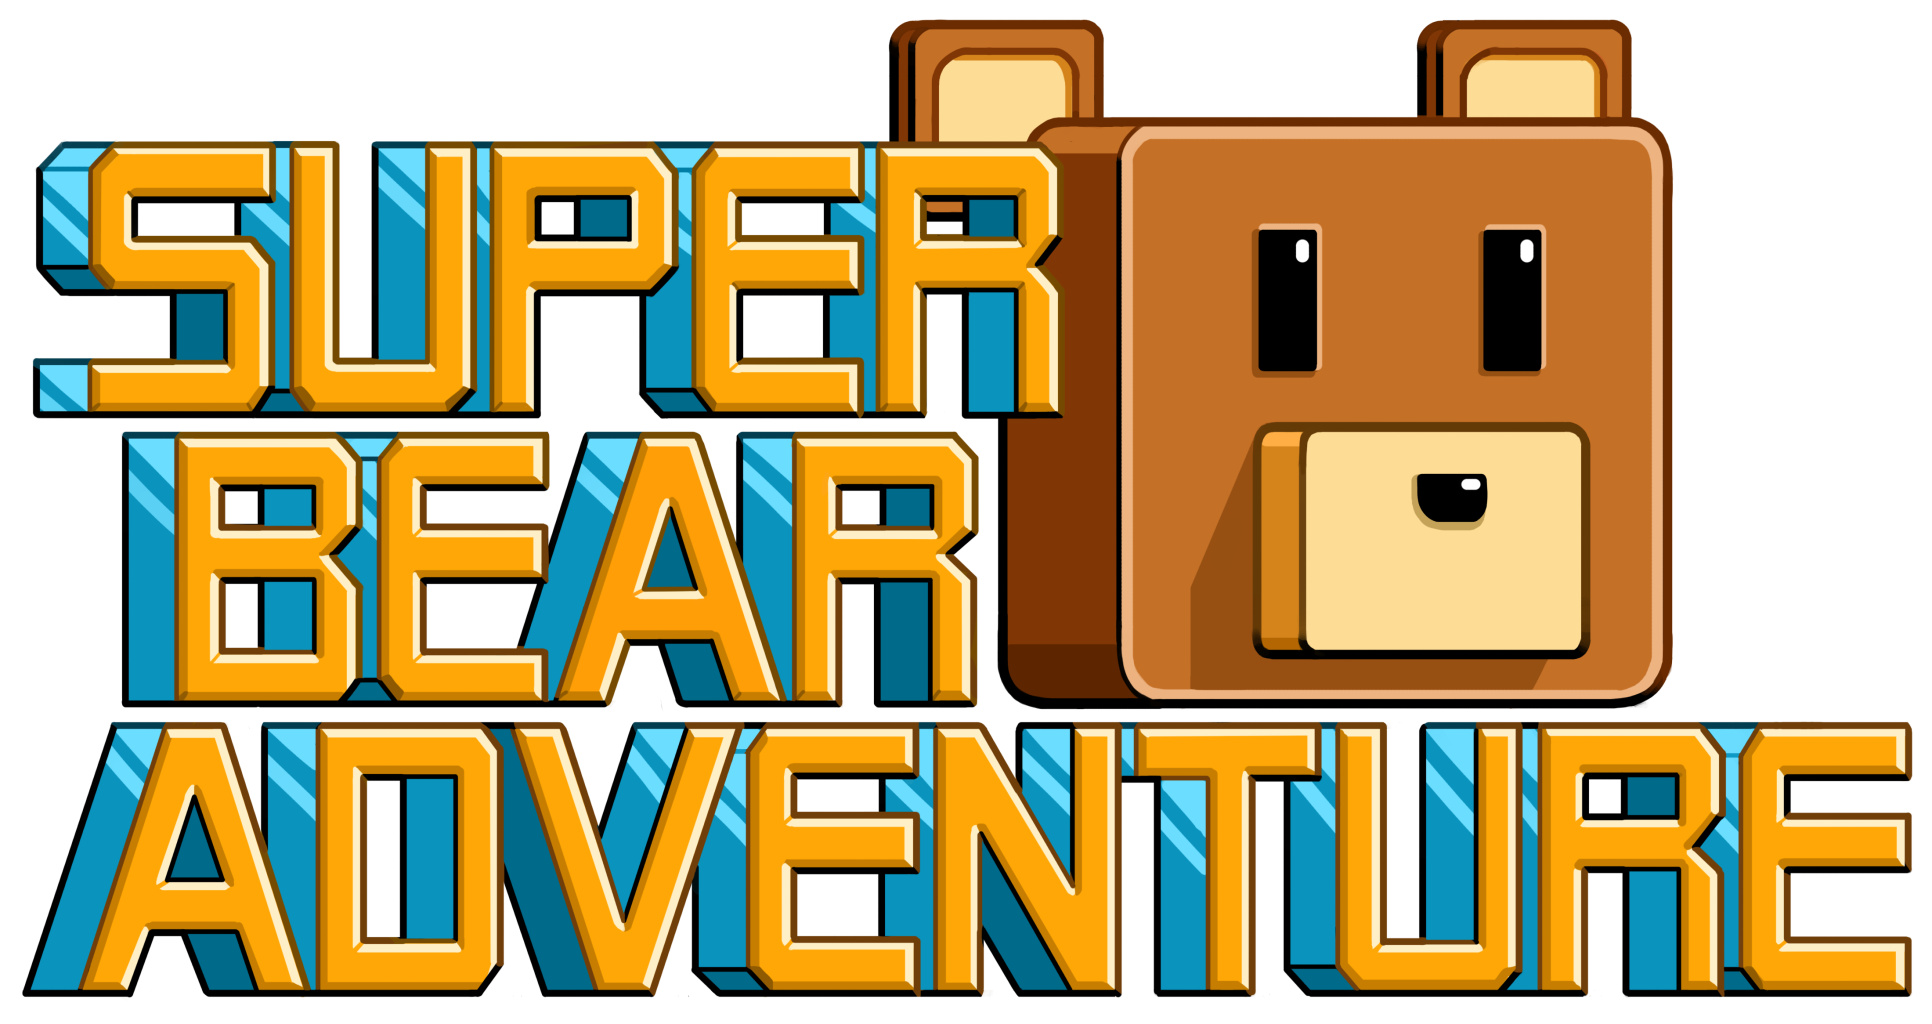 deane torma recommends Pixel Bear Adventure 2